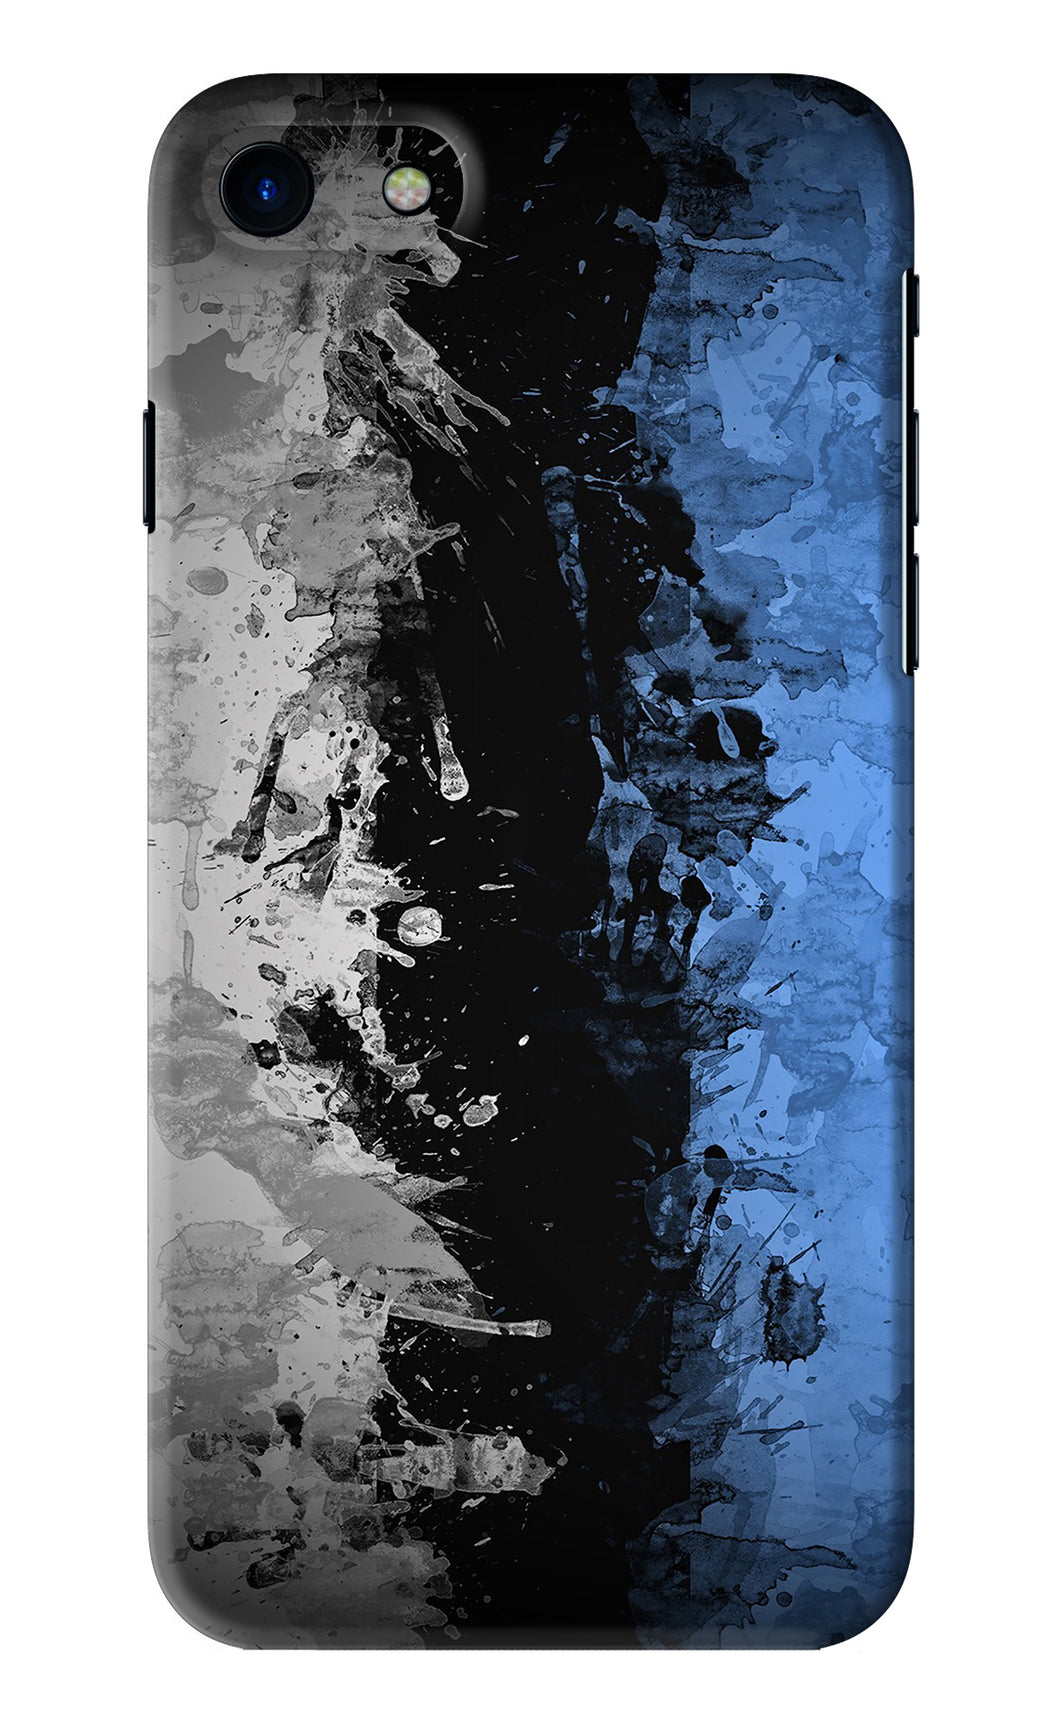 Artistic Design iPhone SE 2020 Back Skin Wrap